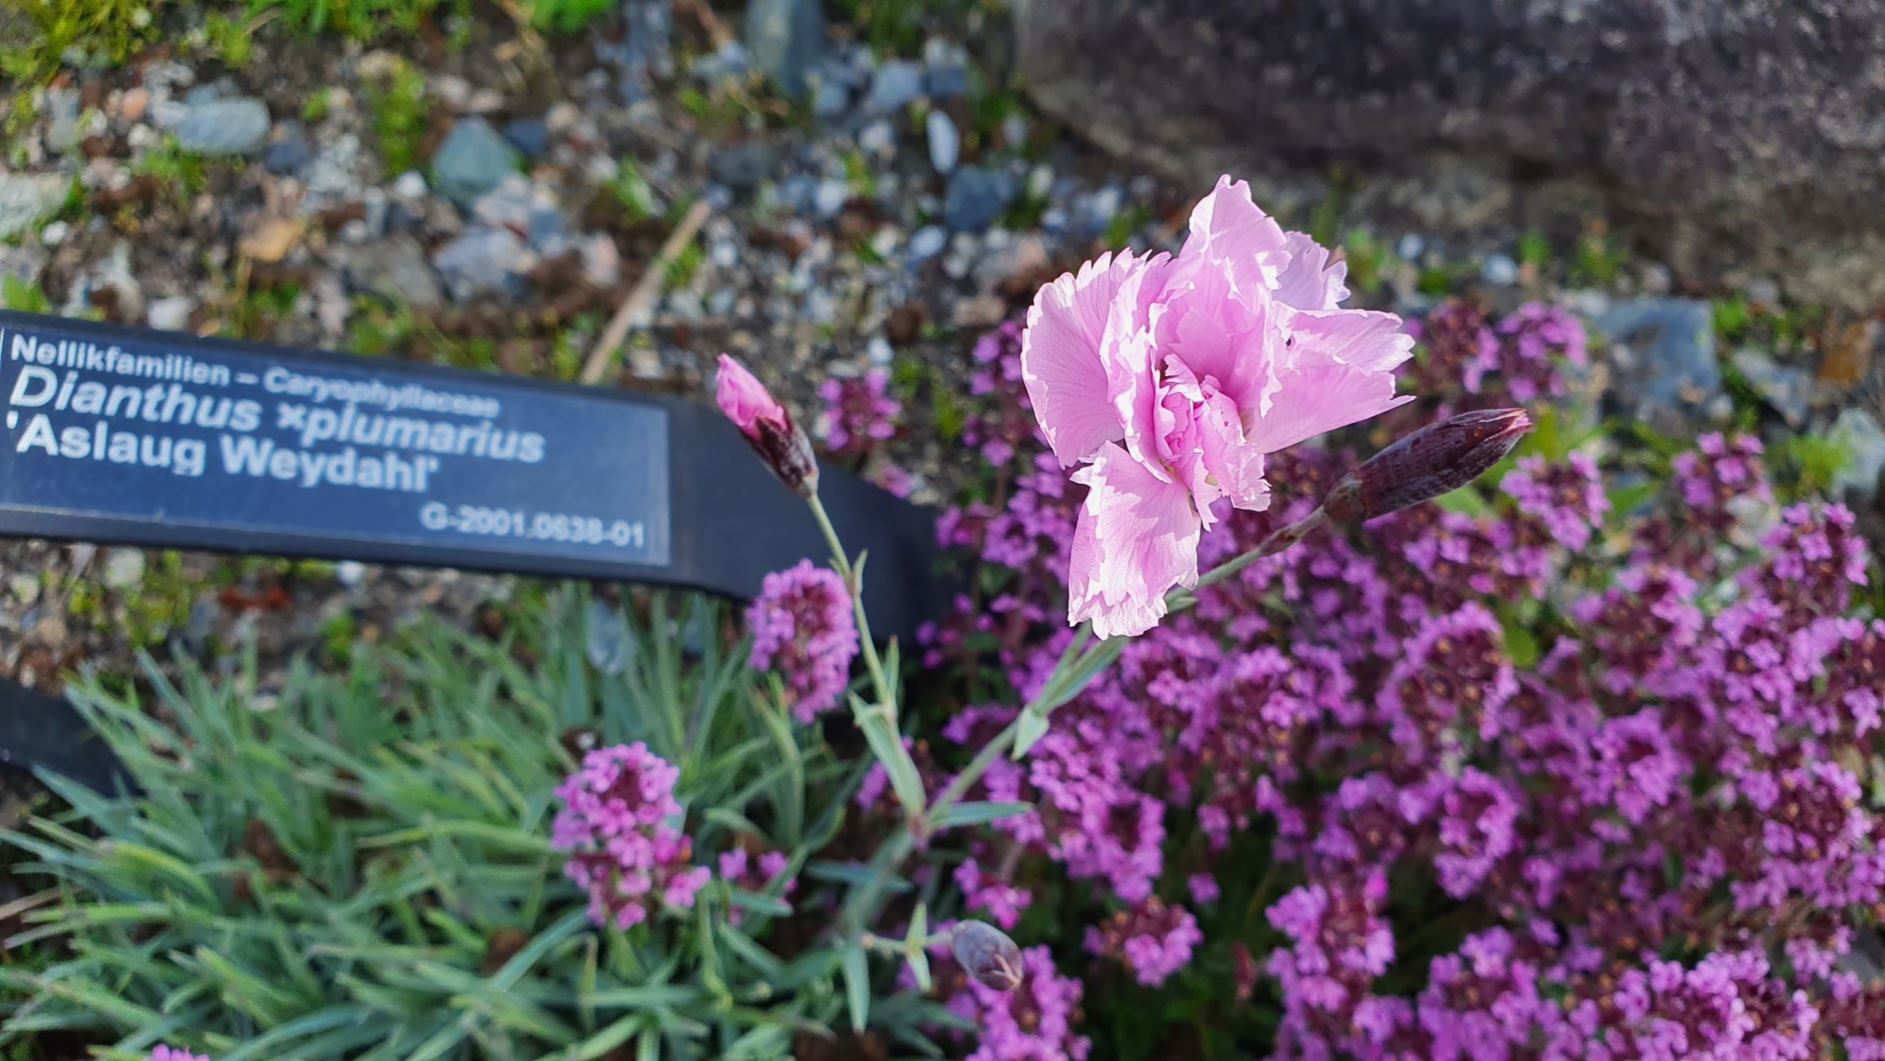 Dianthus ×plumarius 'Aslaug Weydahl'